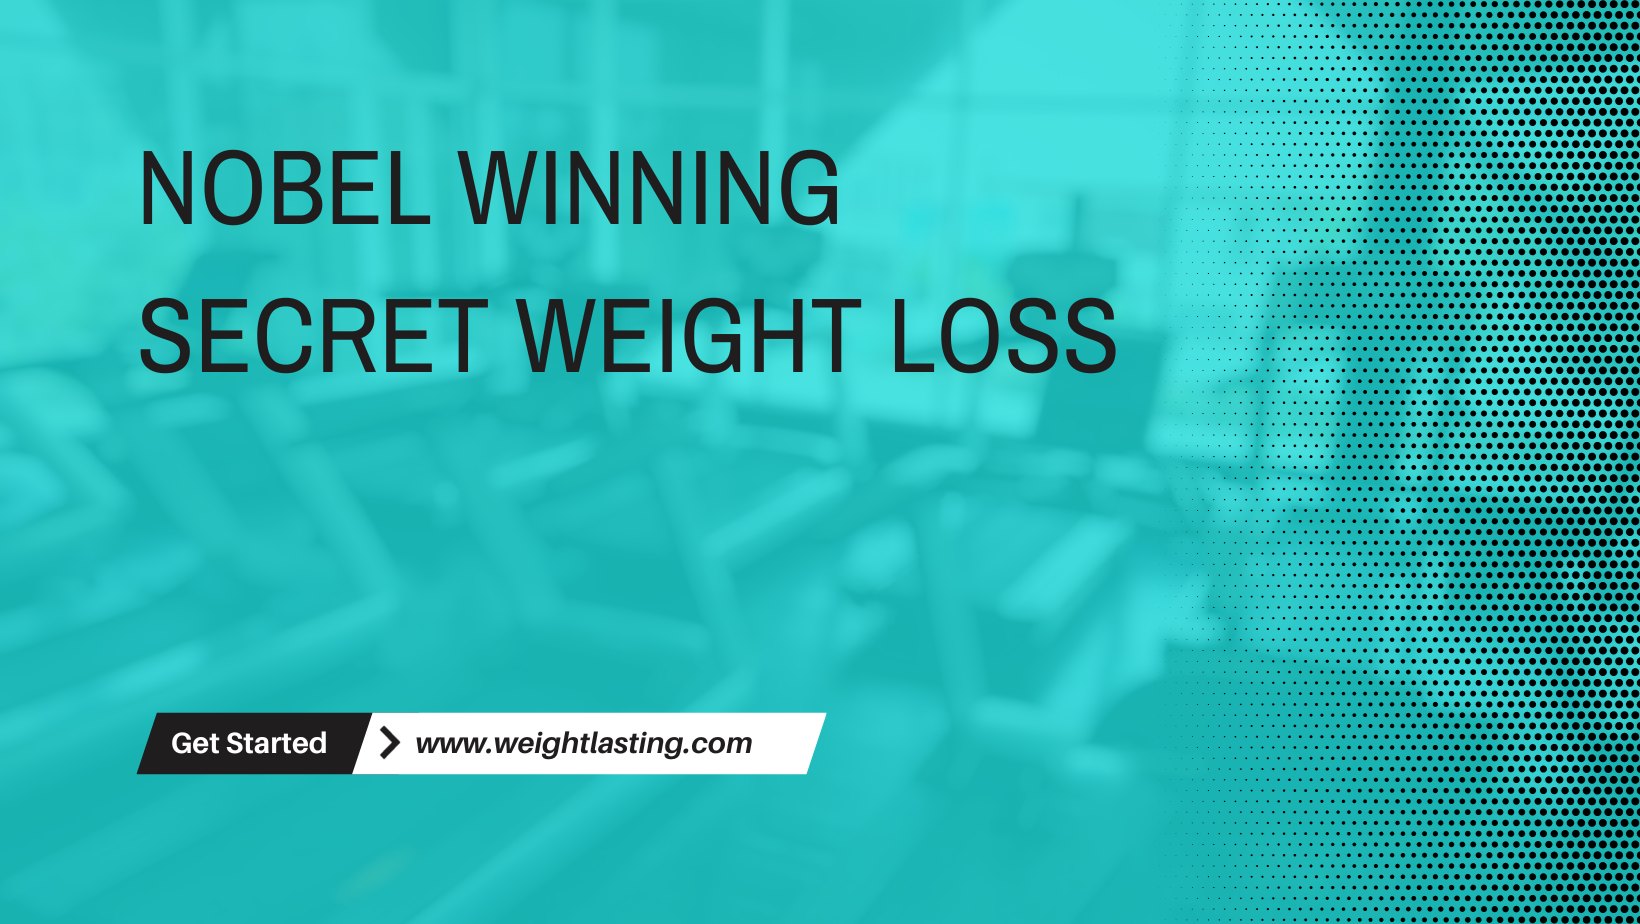 Noble Winning Secret Weight Loss